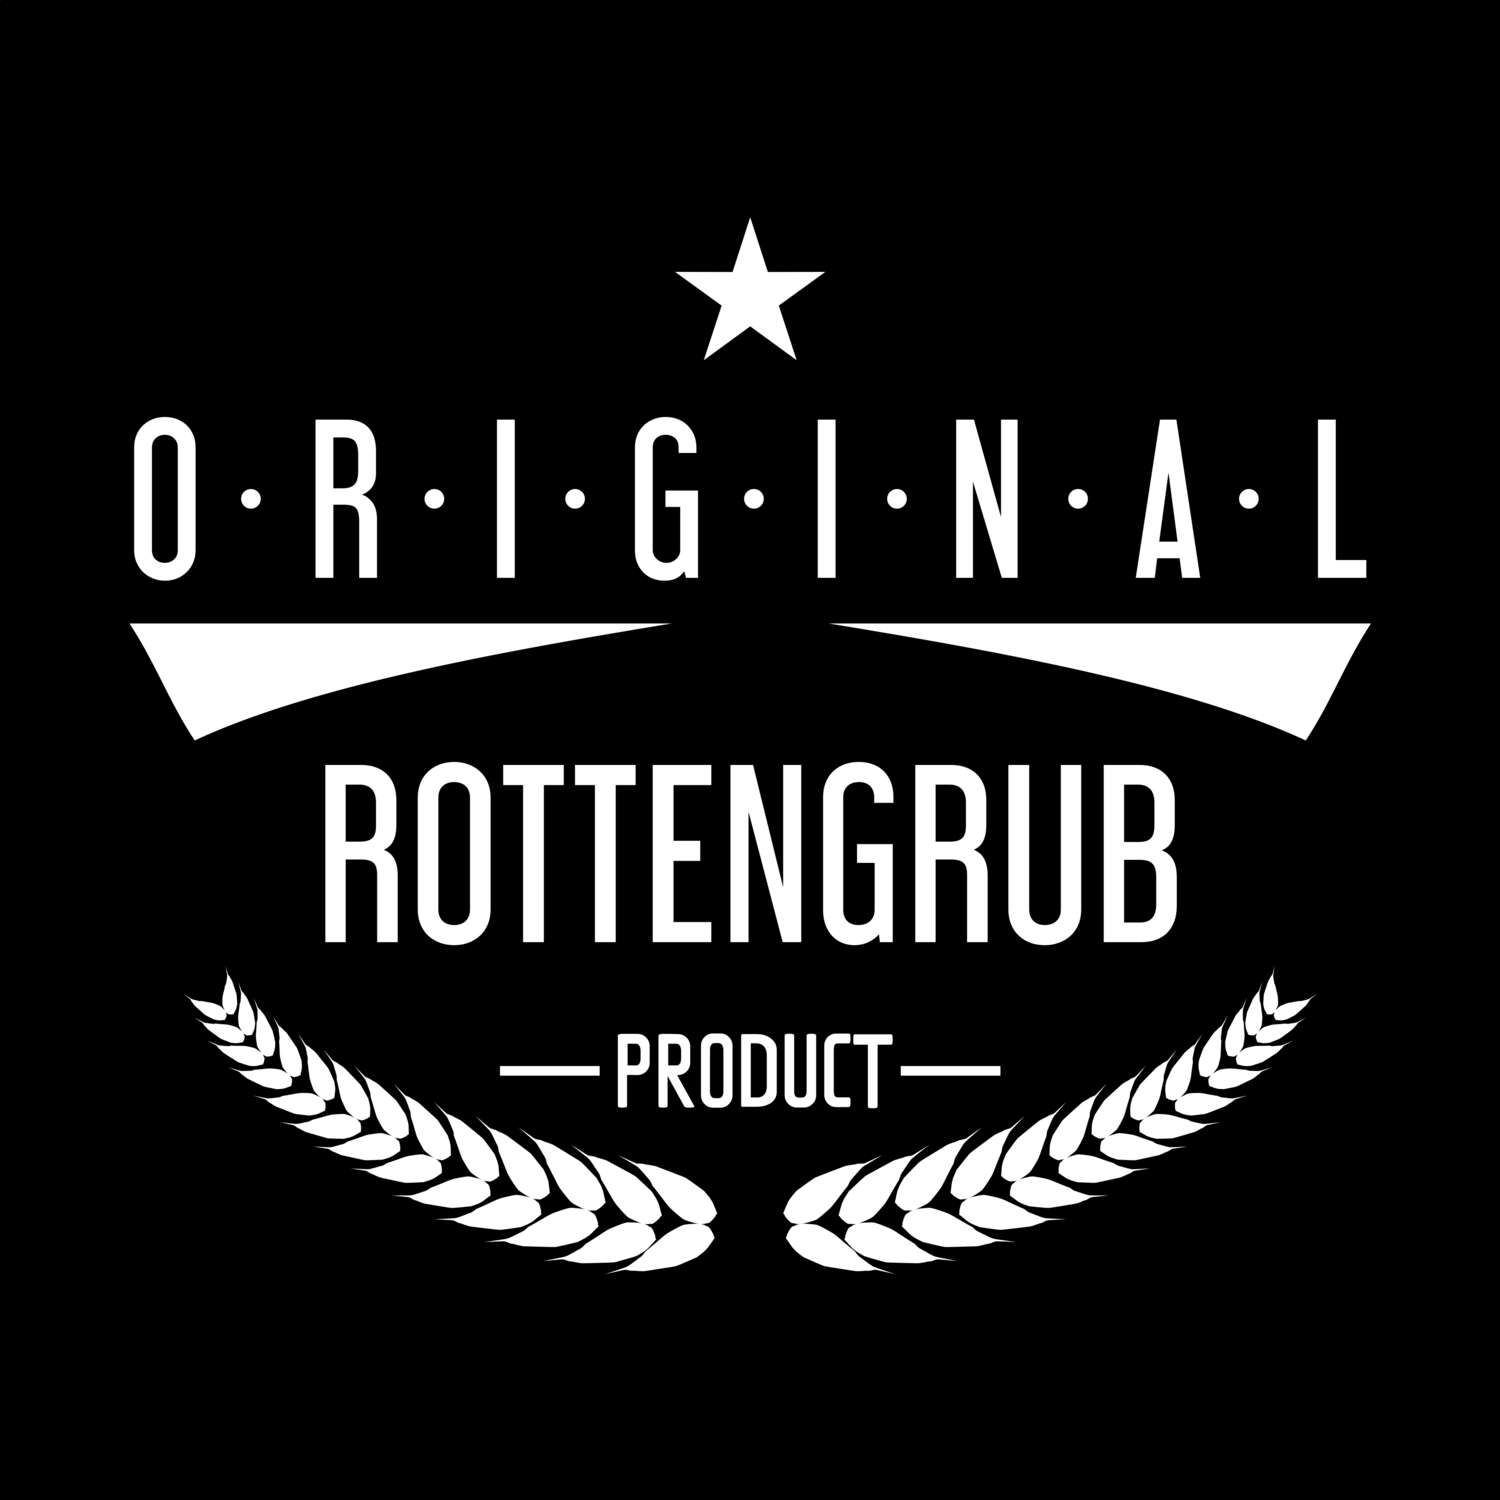 Rottengrub T-Shirt »Original Product«